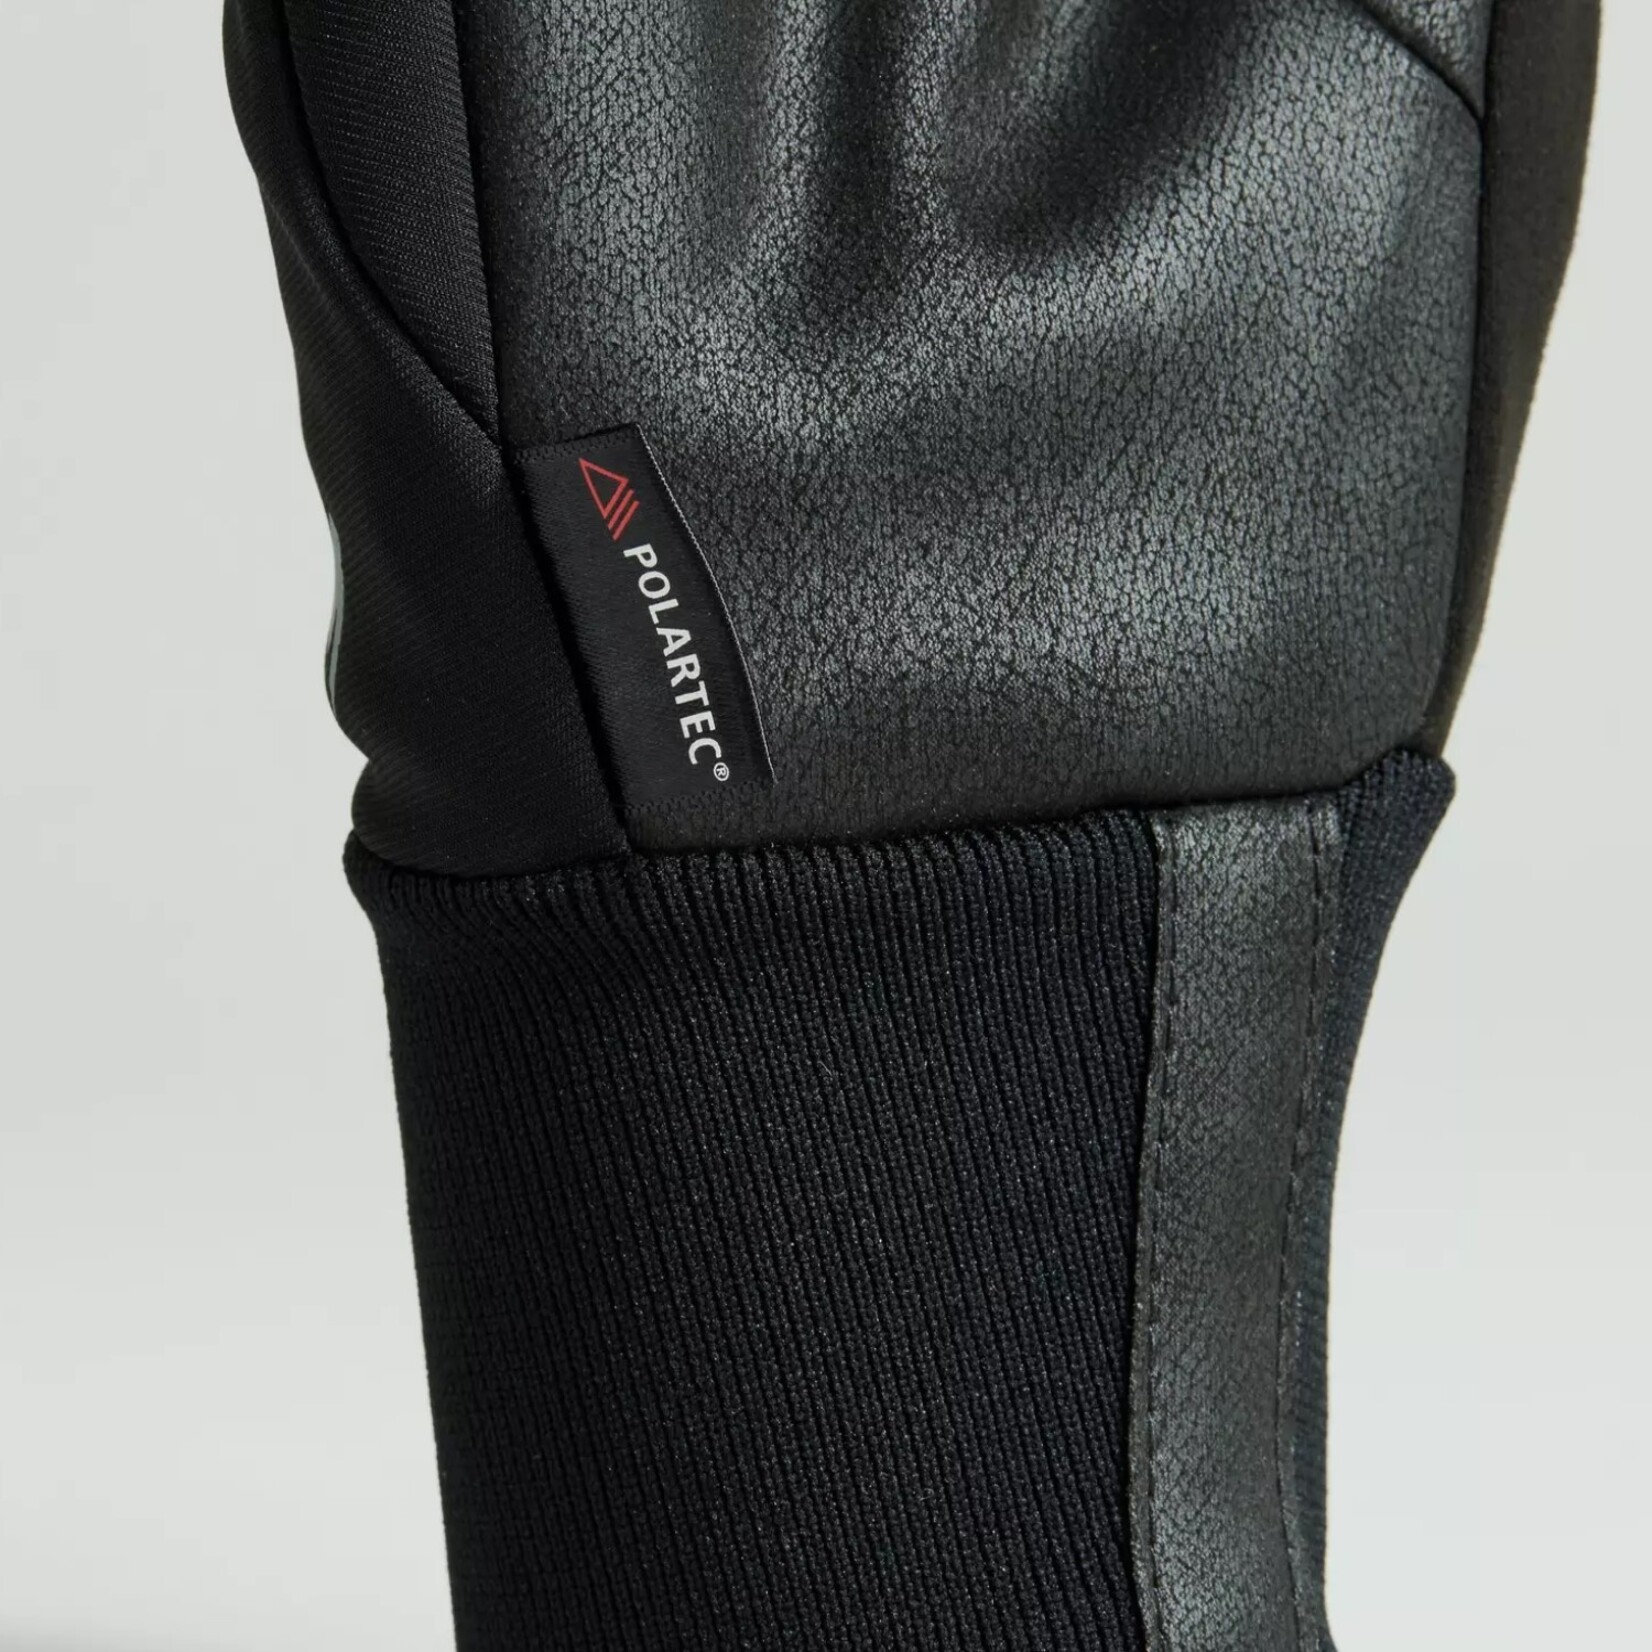 Specialized Specialized Softshell Deep Winter Glove Black